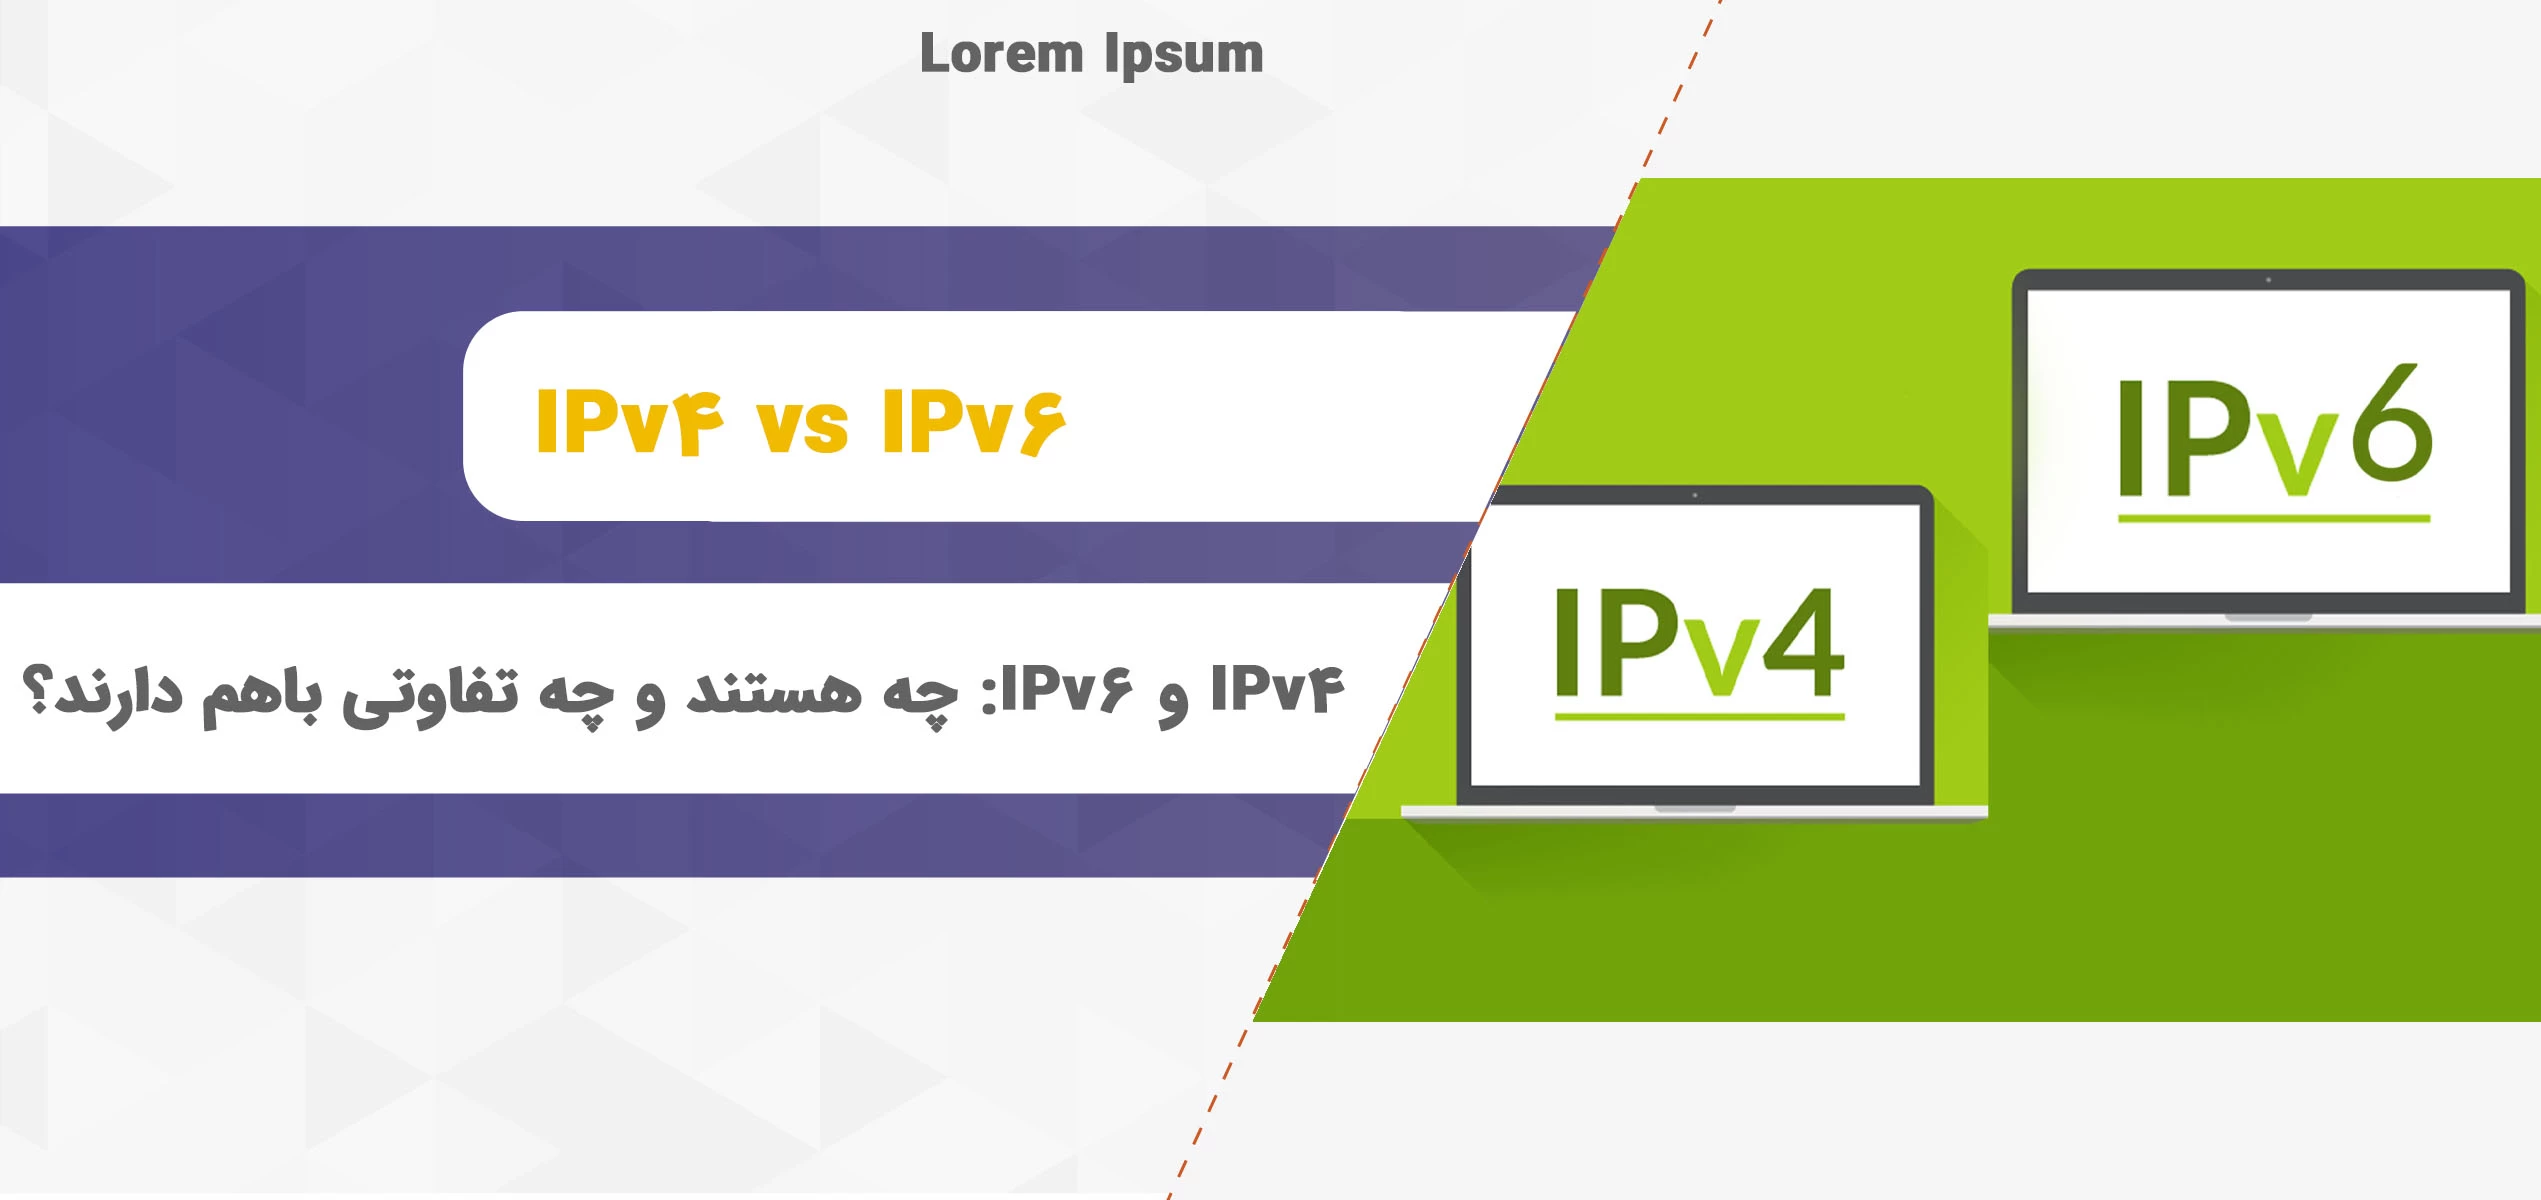  IPv4 و IPv6: چه هستند و چه تفاوتی باهم دارند؟